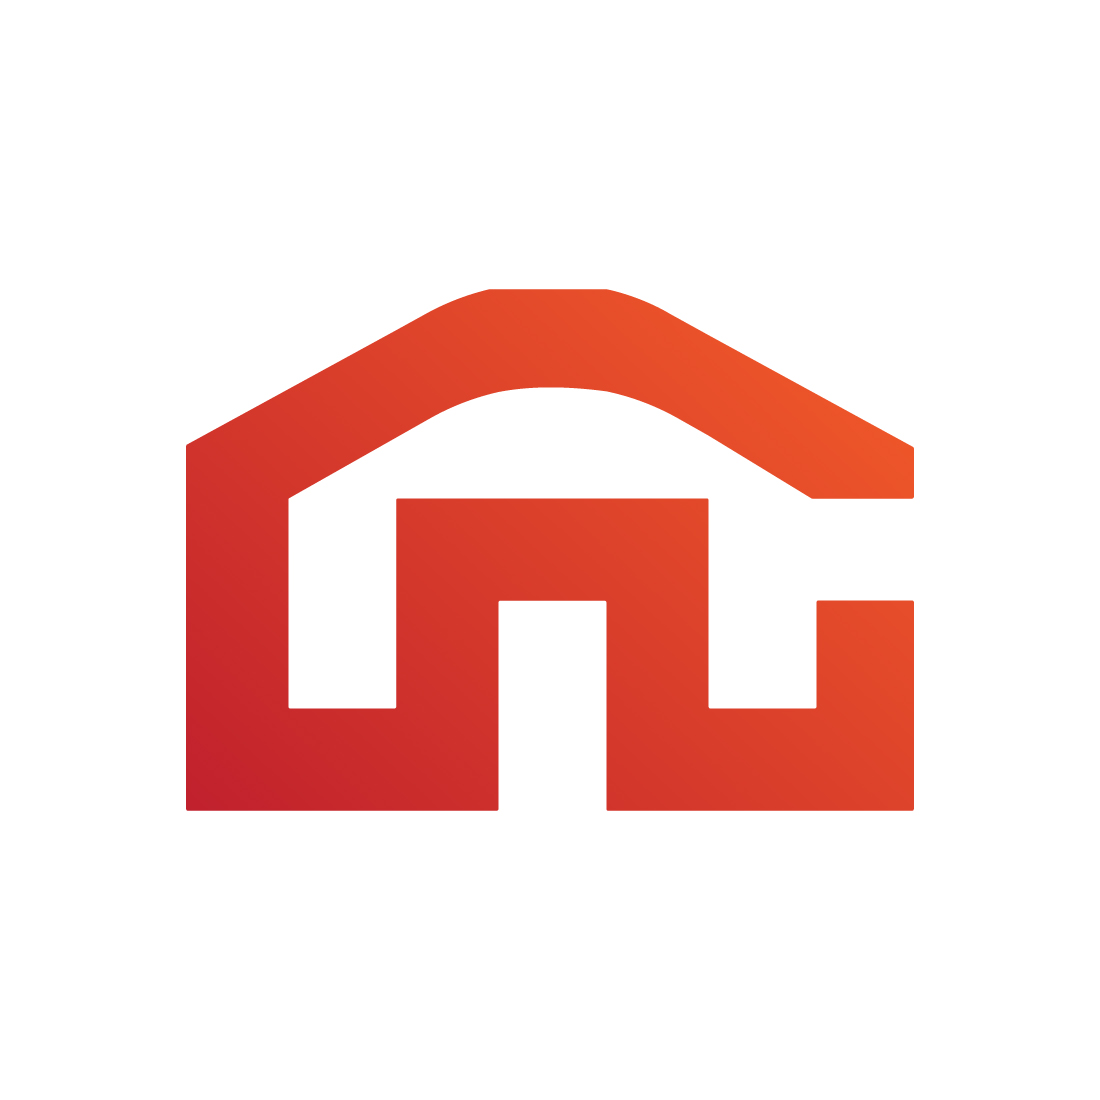 Initials M letters logo design M logo orange color best identity  M House Building logo design, template illustration preview image.